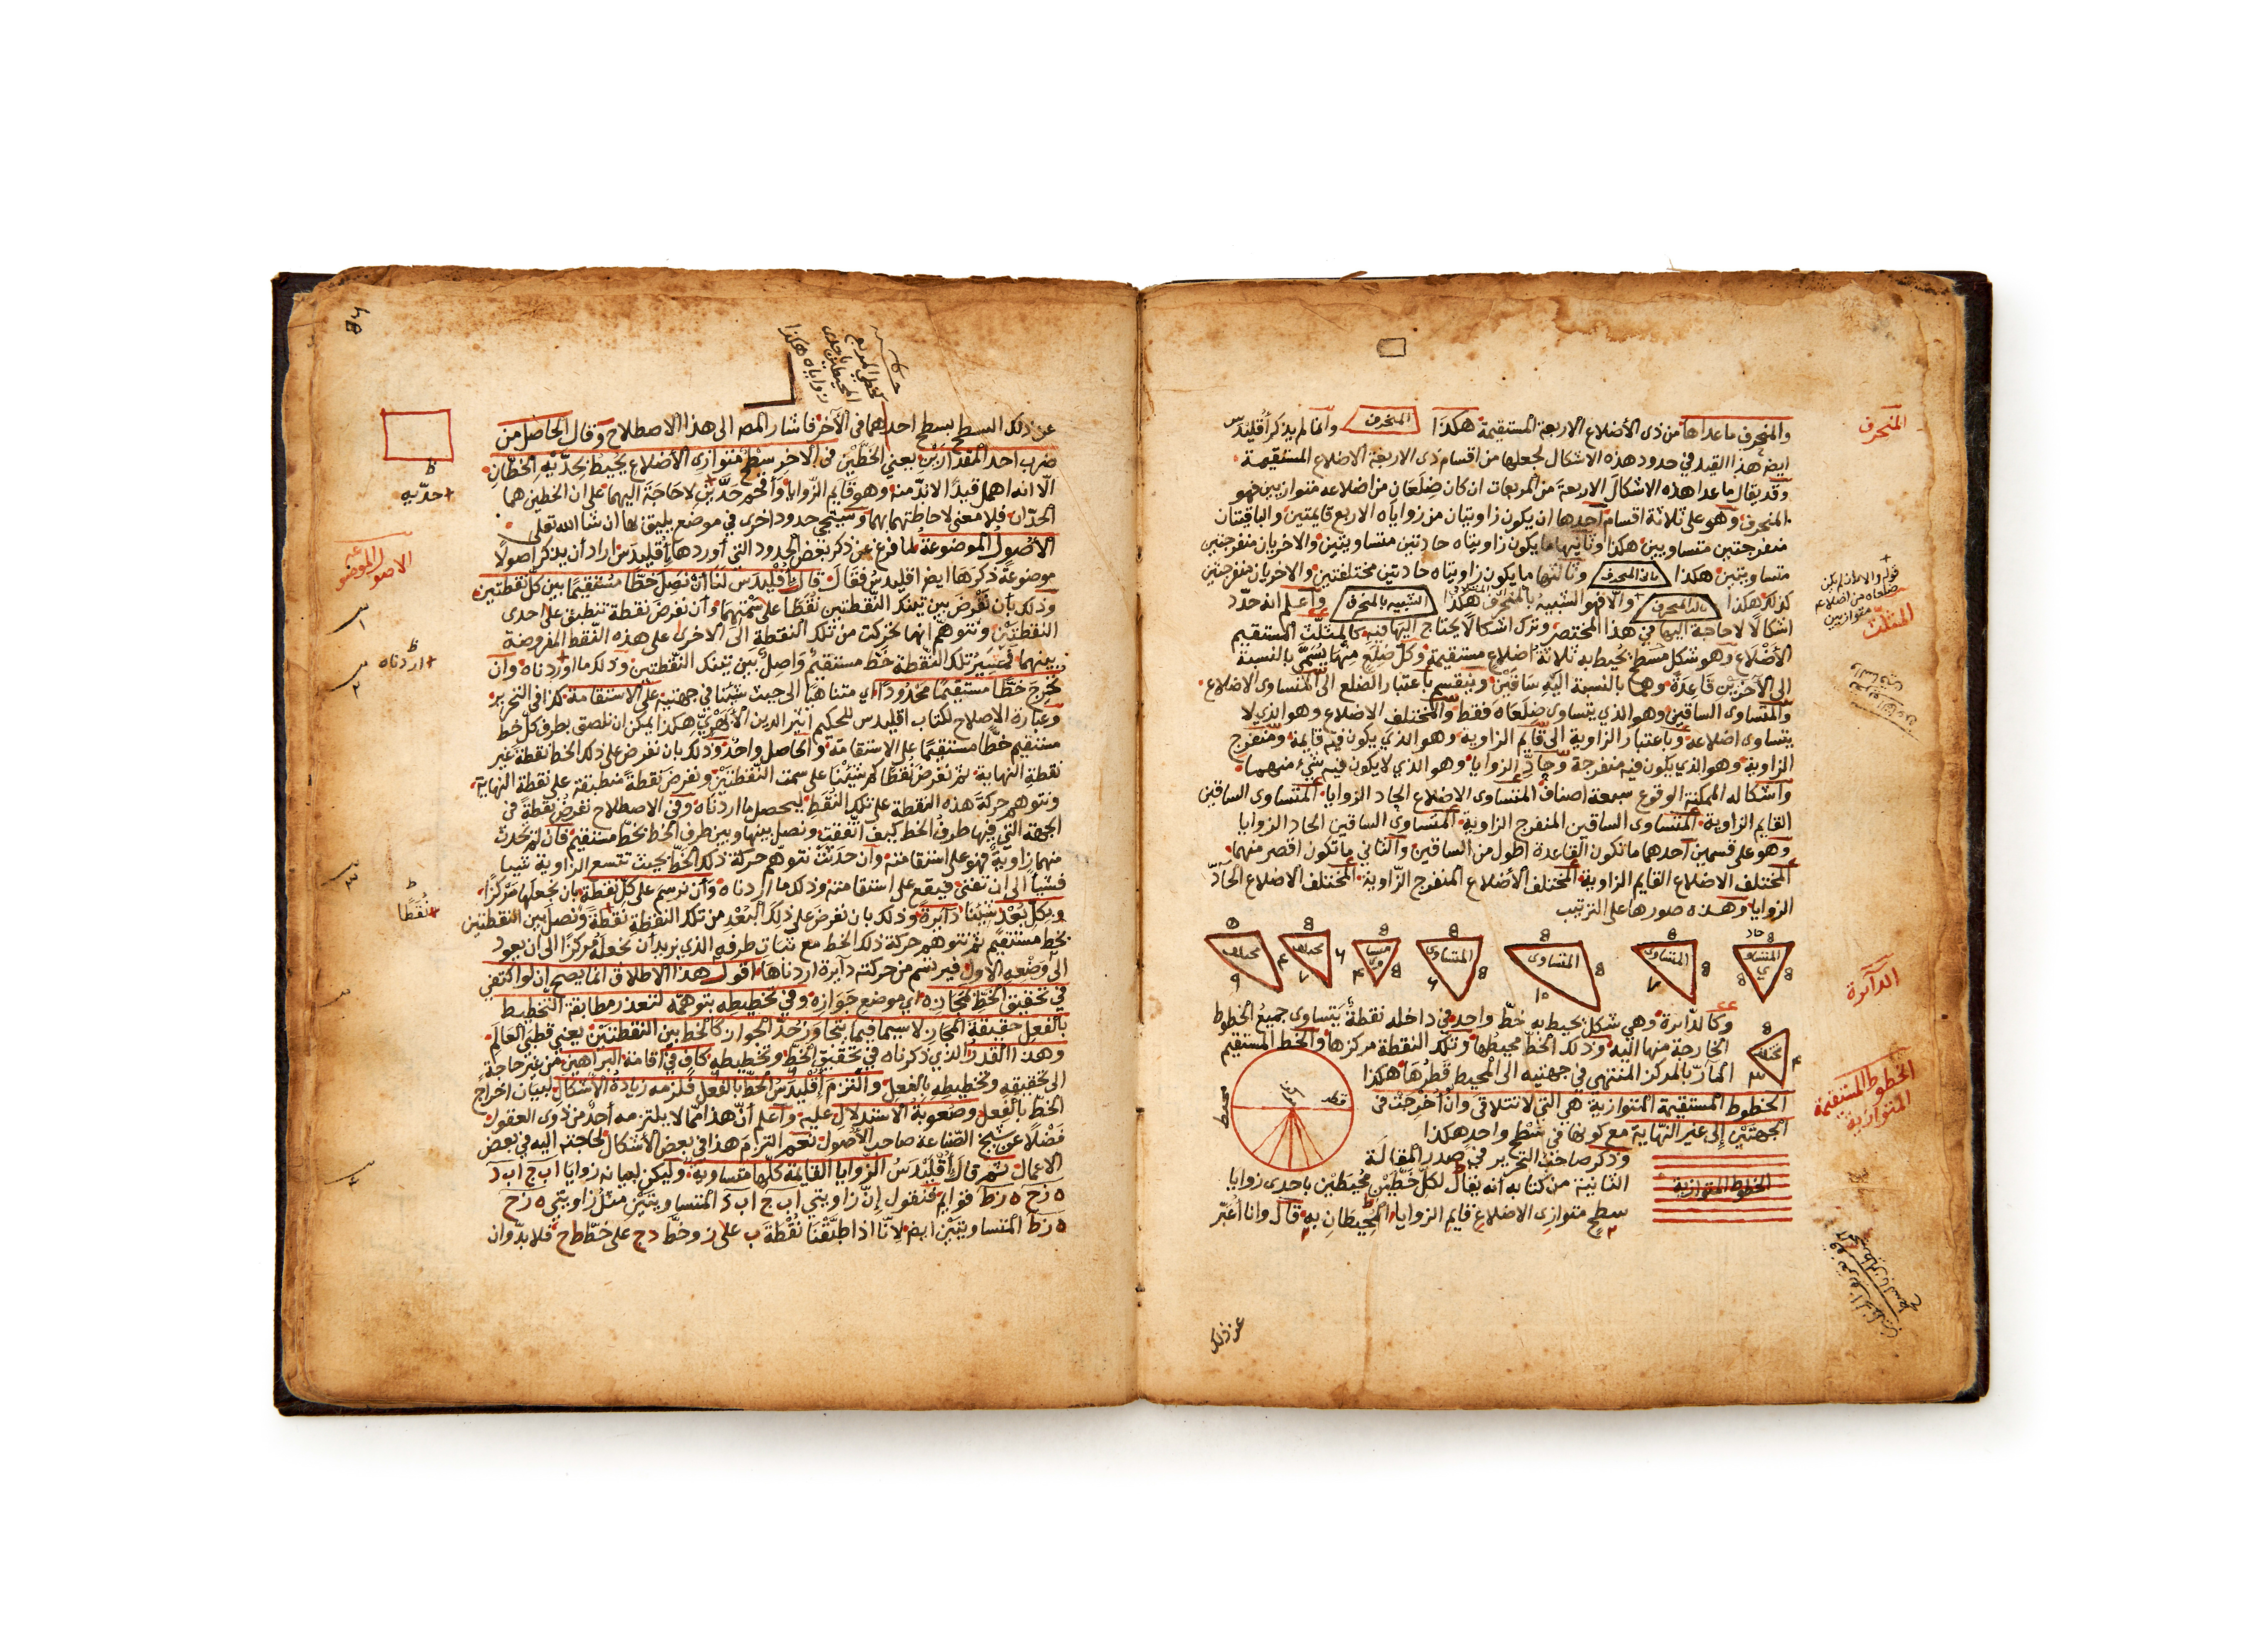 ABDUL MOUTI BIN HASSAN BIN ABDULLAH AL MEKKI, A MANUSCRIPT ABOUT GEOMETRY & MATHS, DATED 983AH